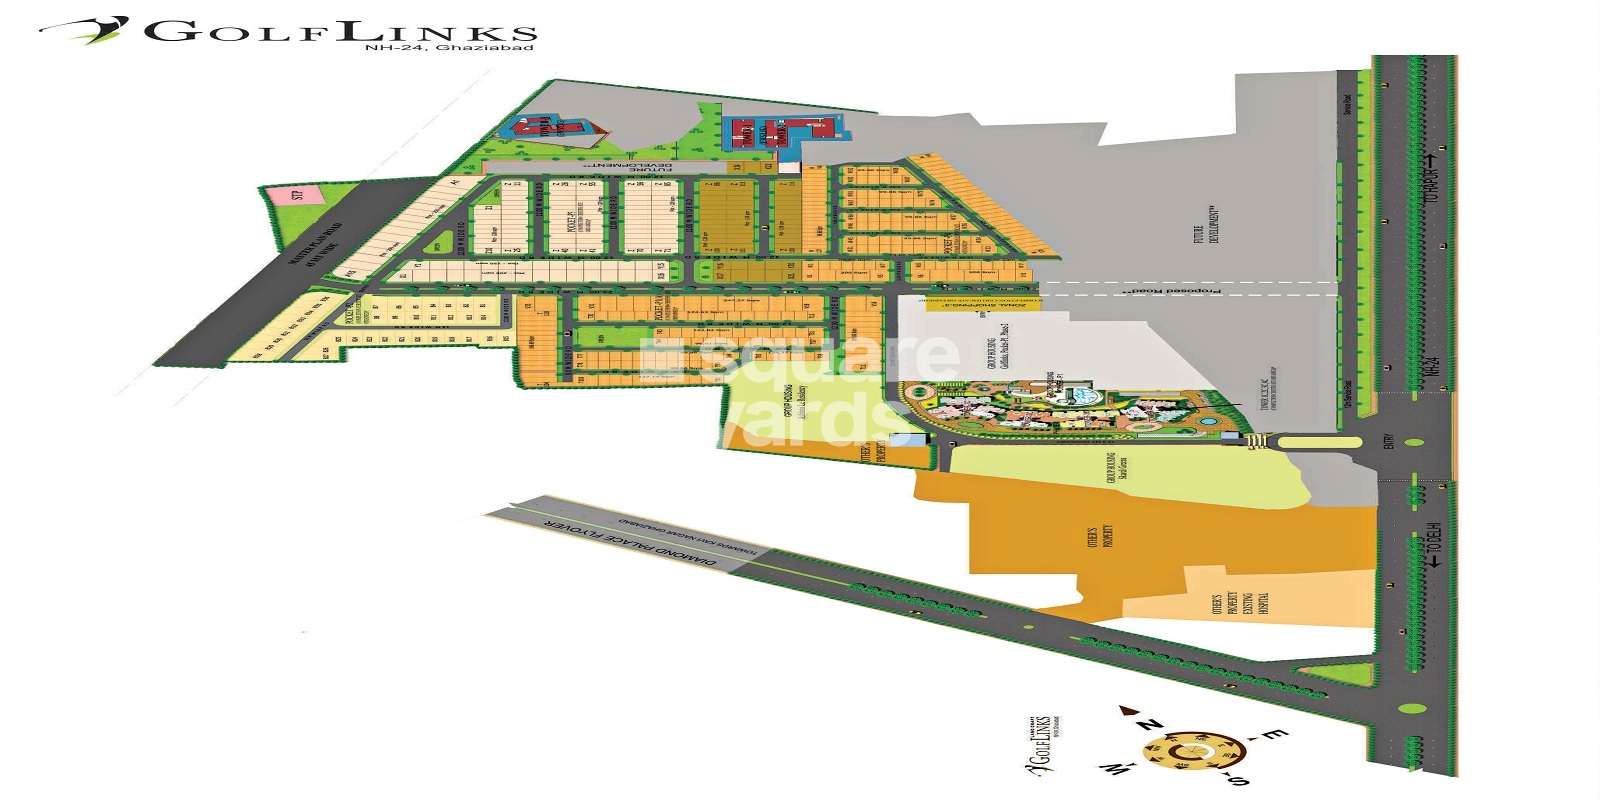 landcraft golflinks apartments project master plan image1